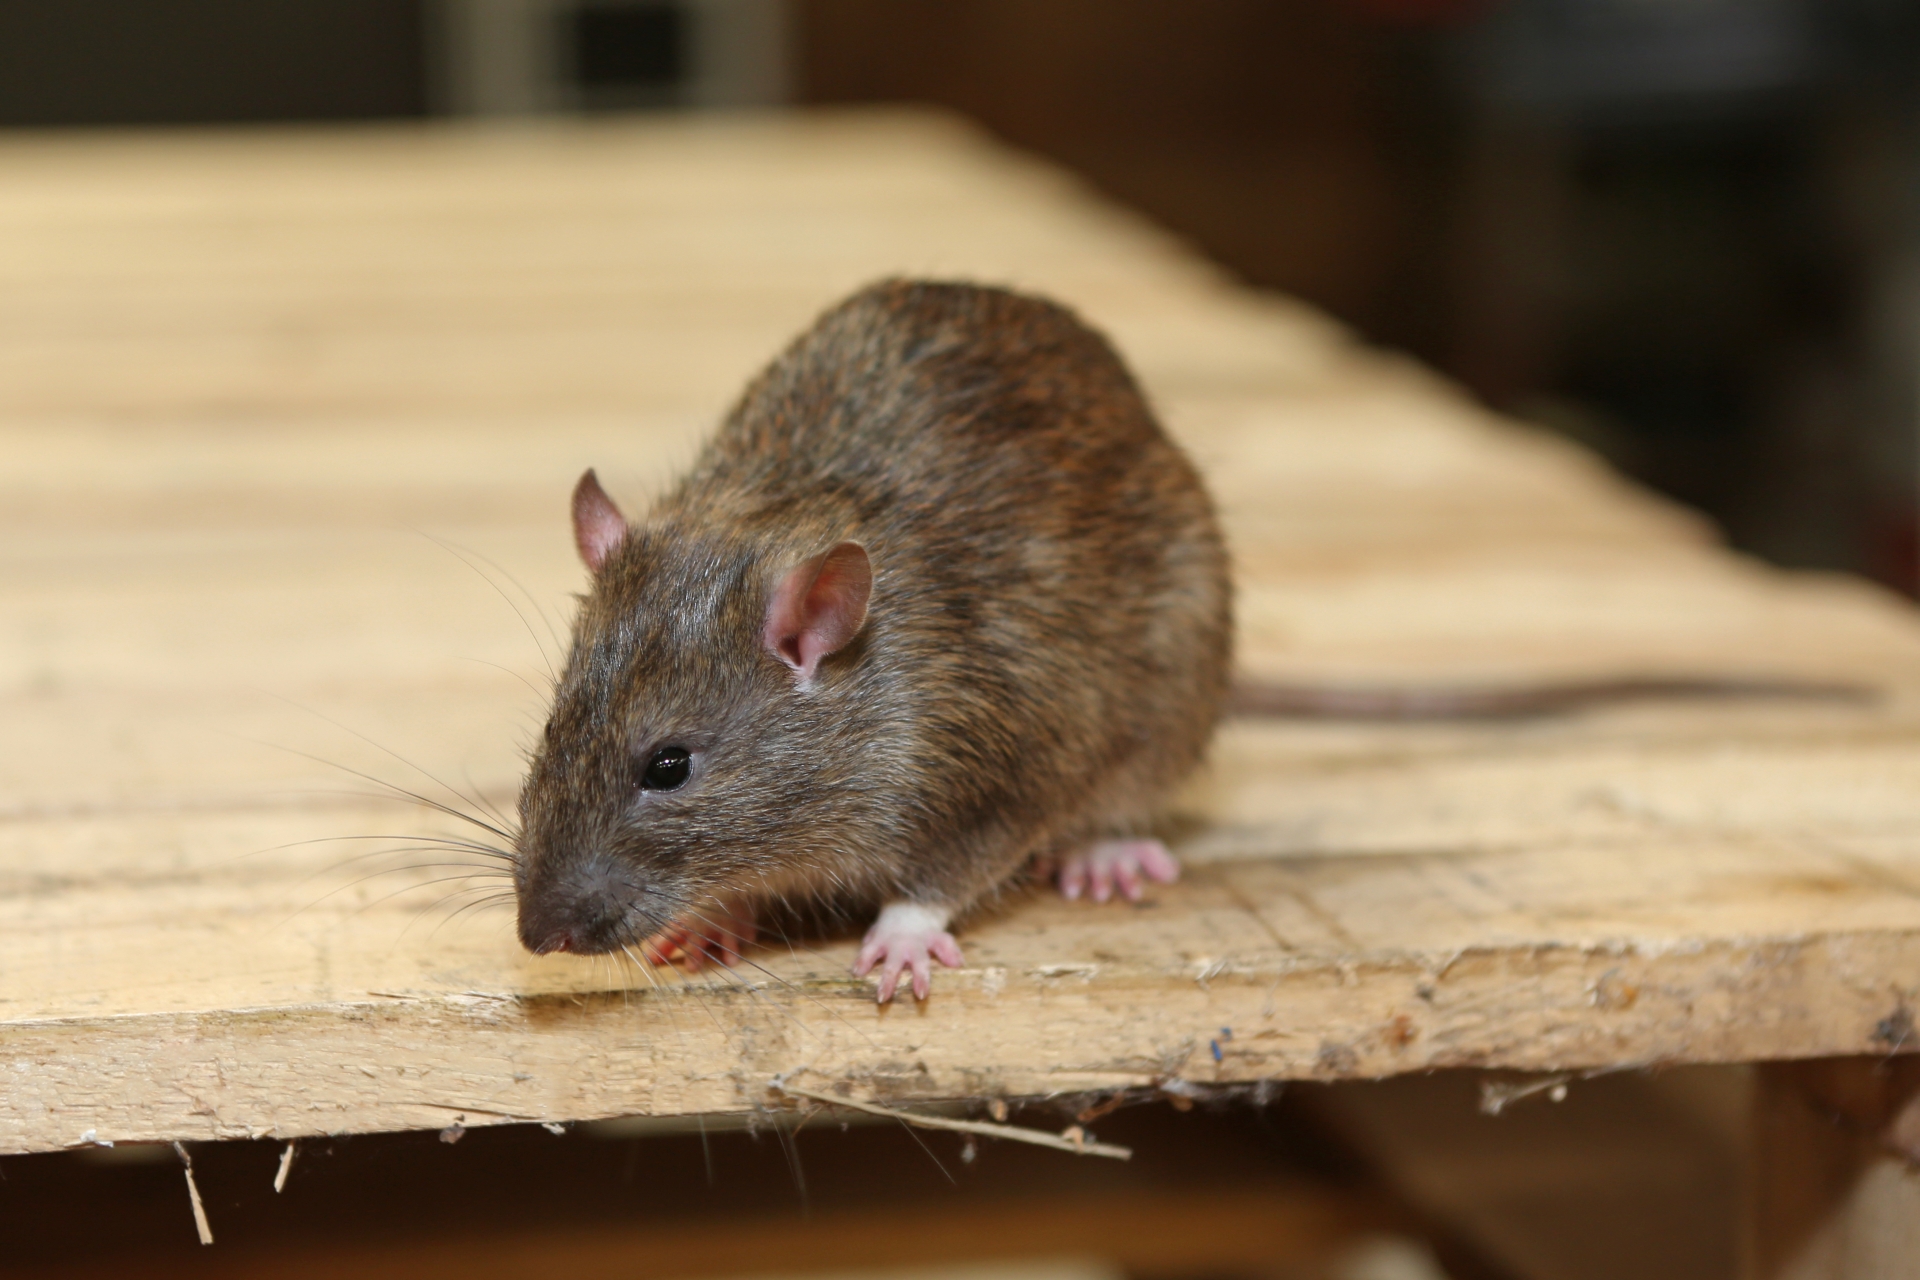 Rat extermination, Pest Control in Havering-atte-Bower, Abridge, RM4. Call Now 020 8166 9746